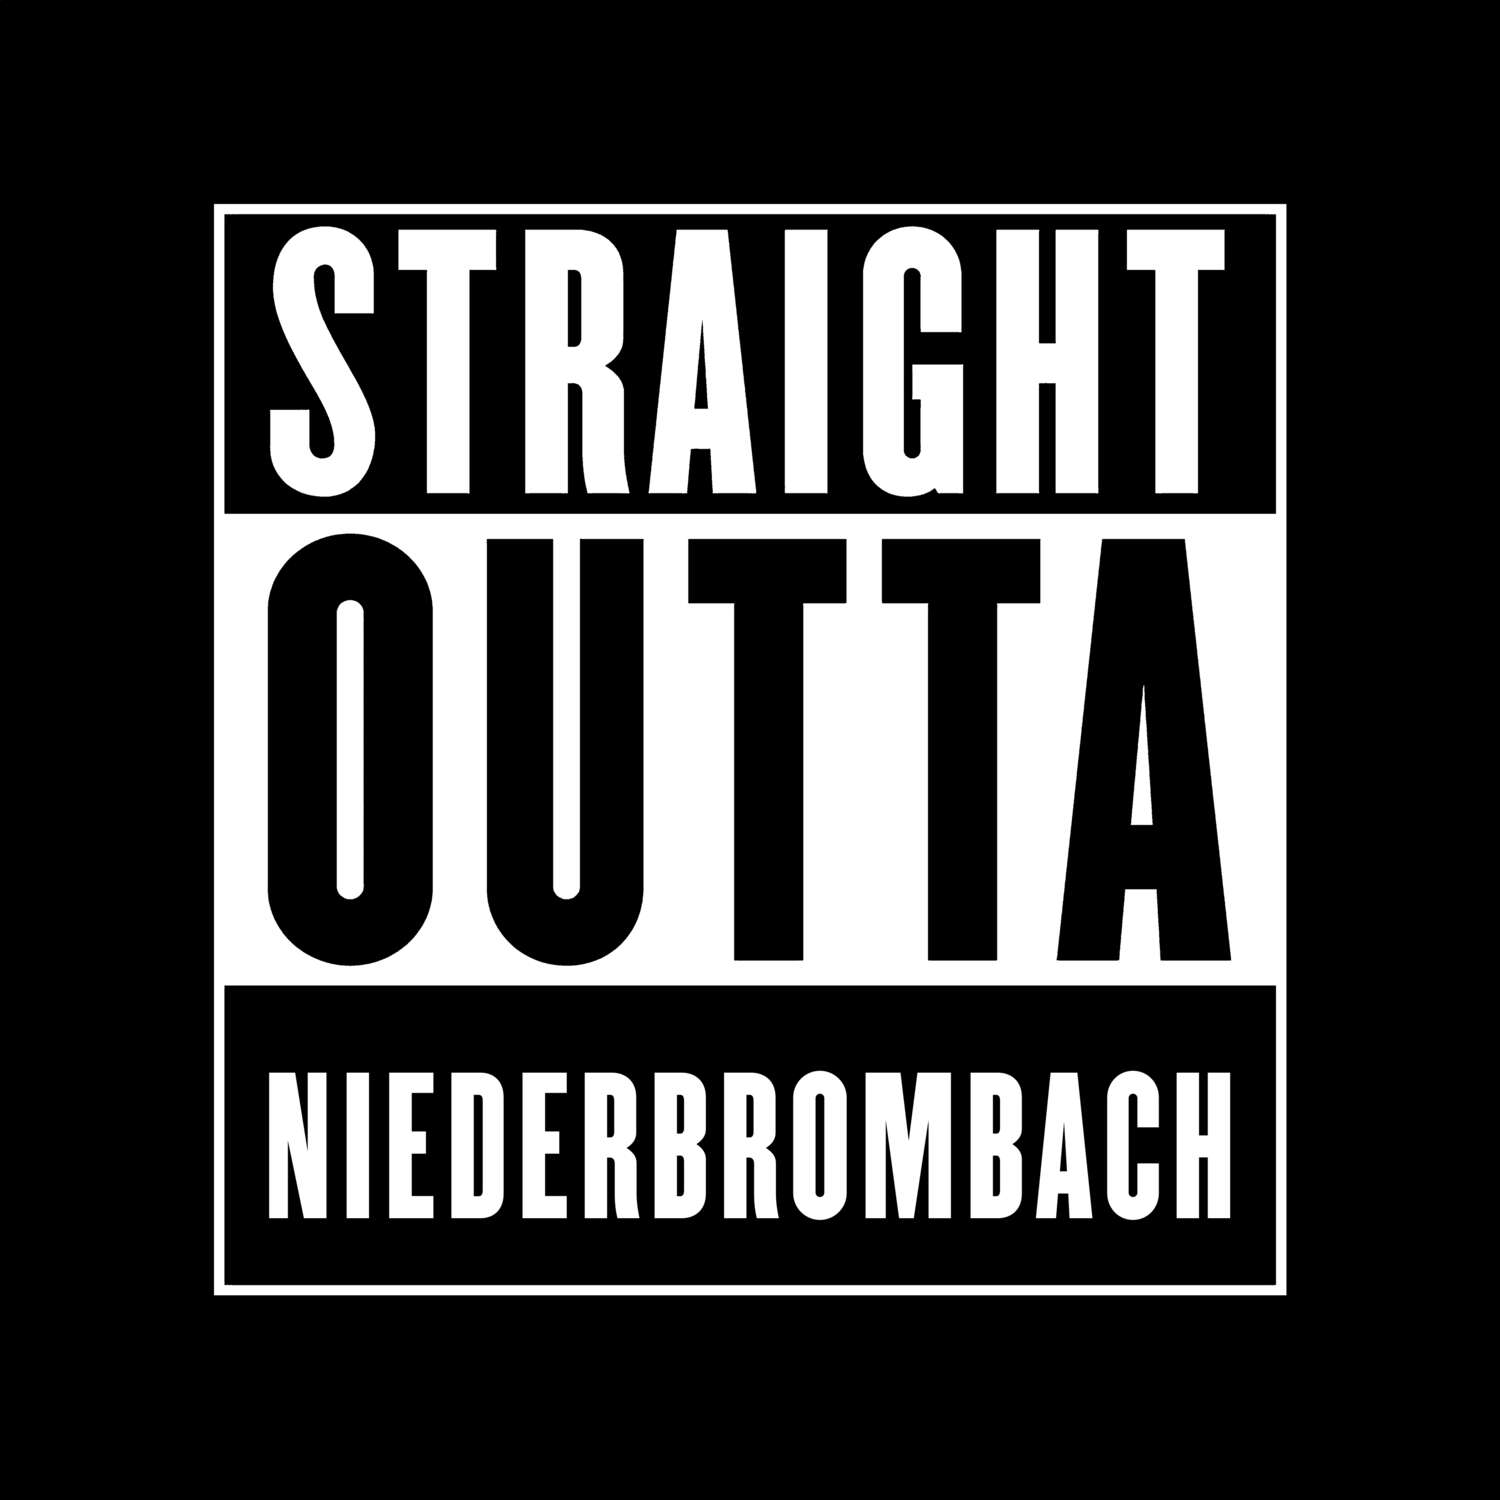 Niederbrombach T-Shirt »Straight Outta«